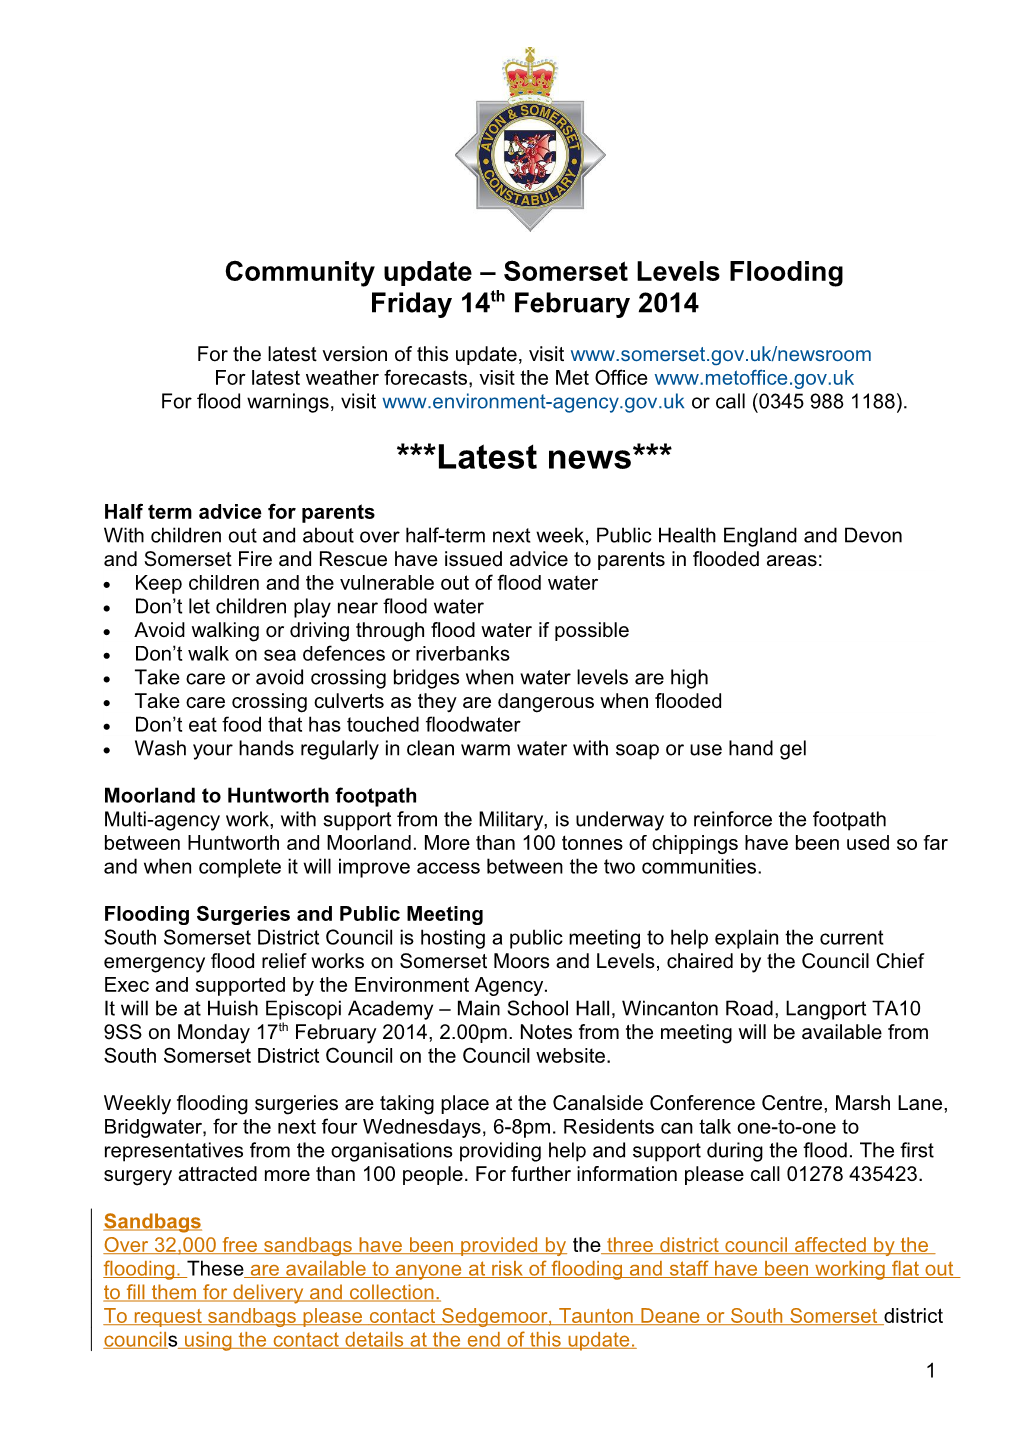 Community Update Somerset Levels Flooding